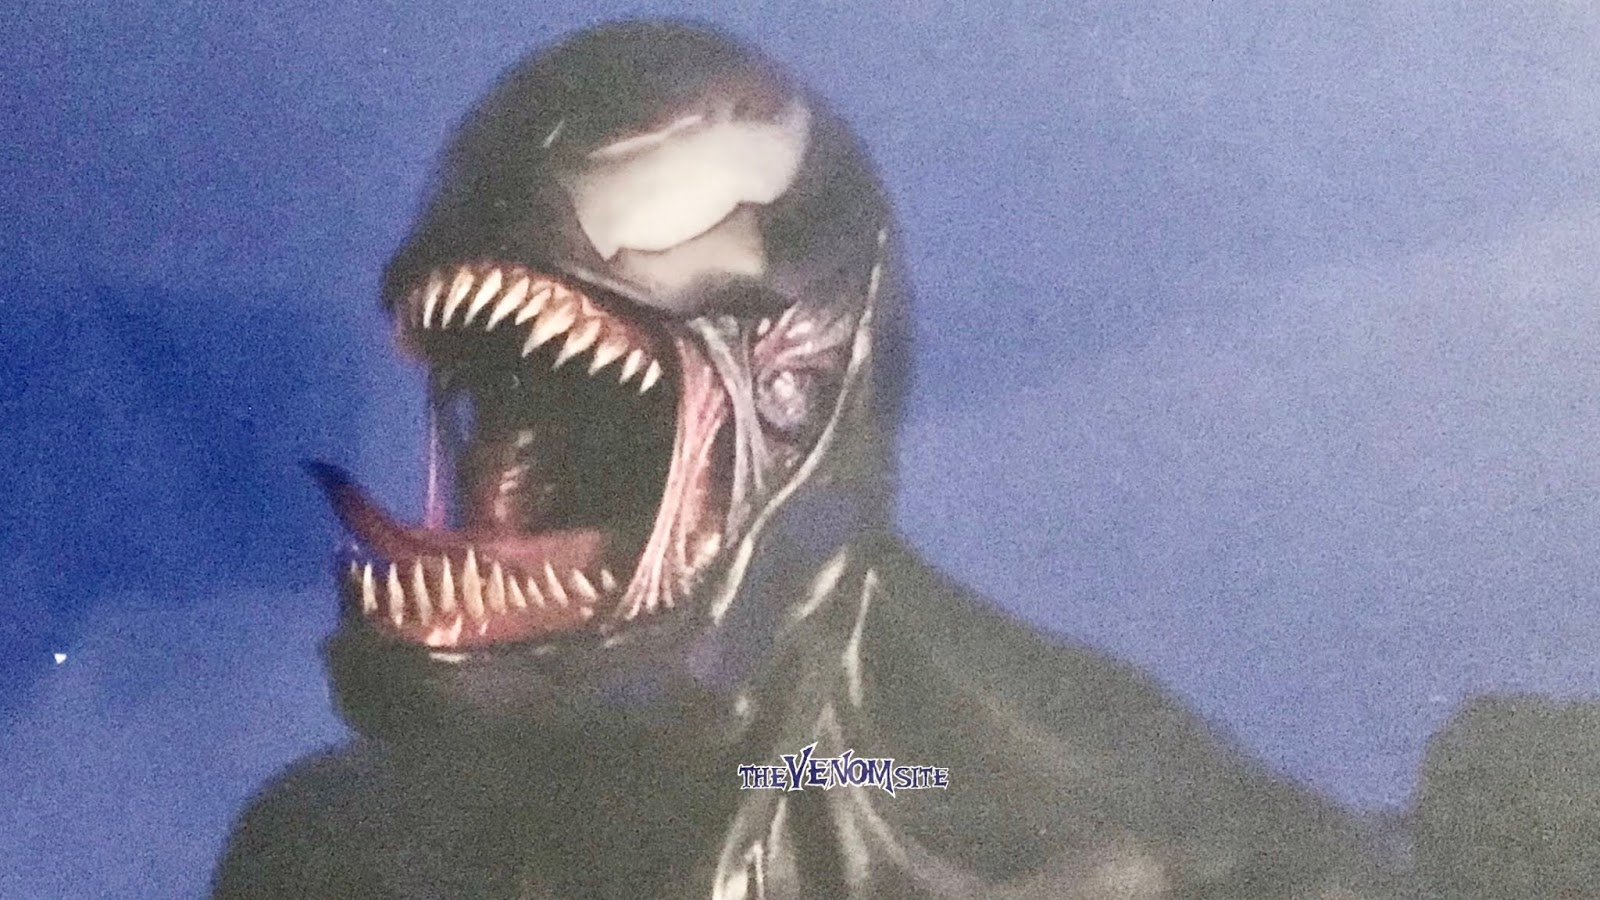 The Venom Site: Spider-Man 3 Venom Concept Art Project